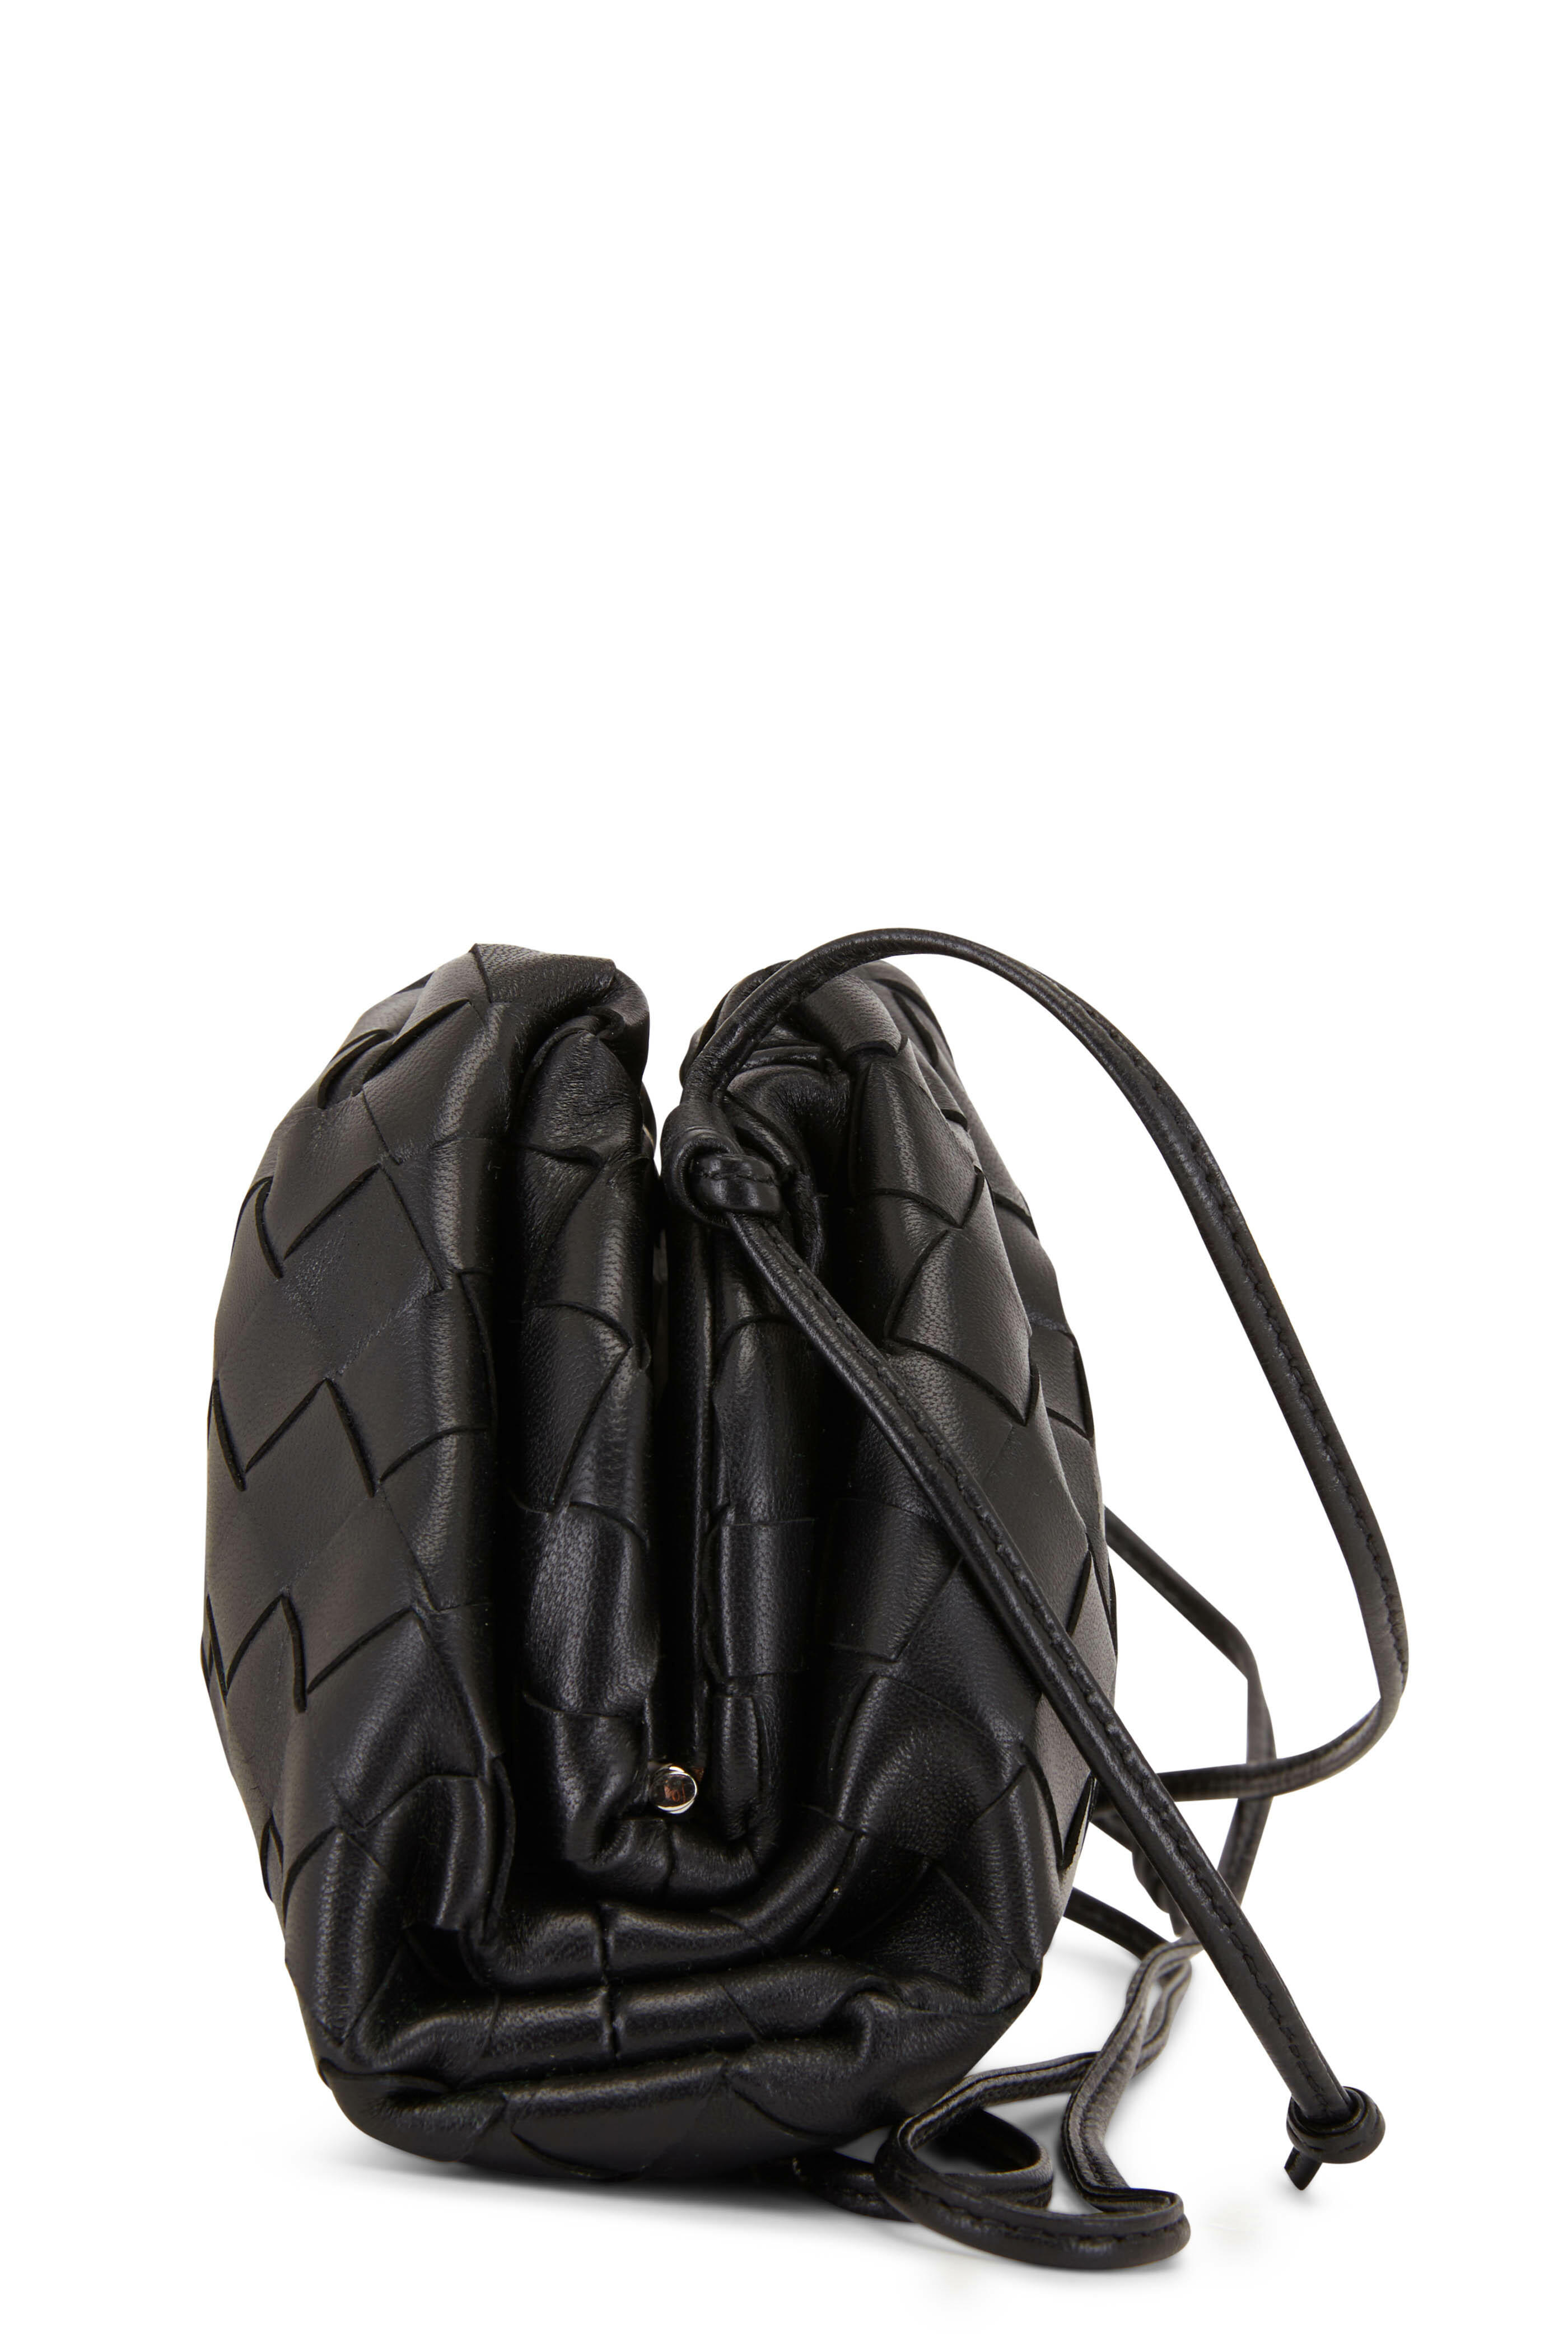 Bottega Veneta Women's Mini Black Woven Leather Crossbody Bag | by Mitchell Stores